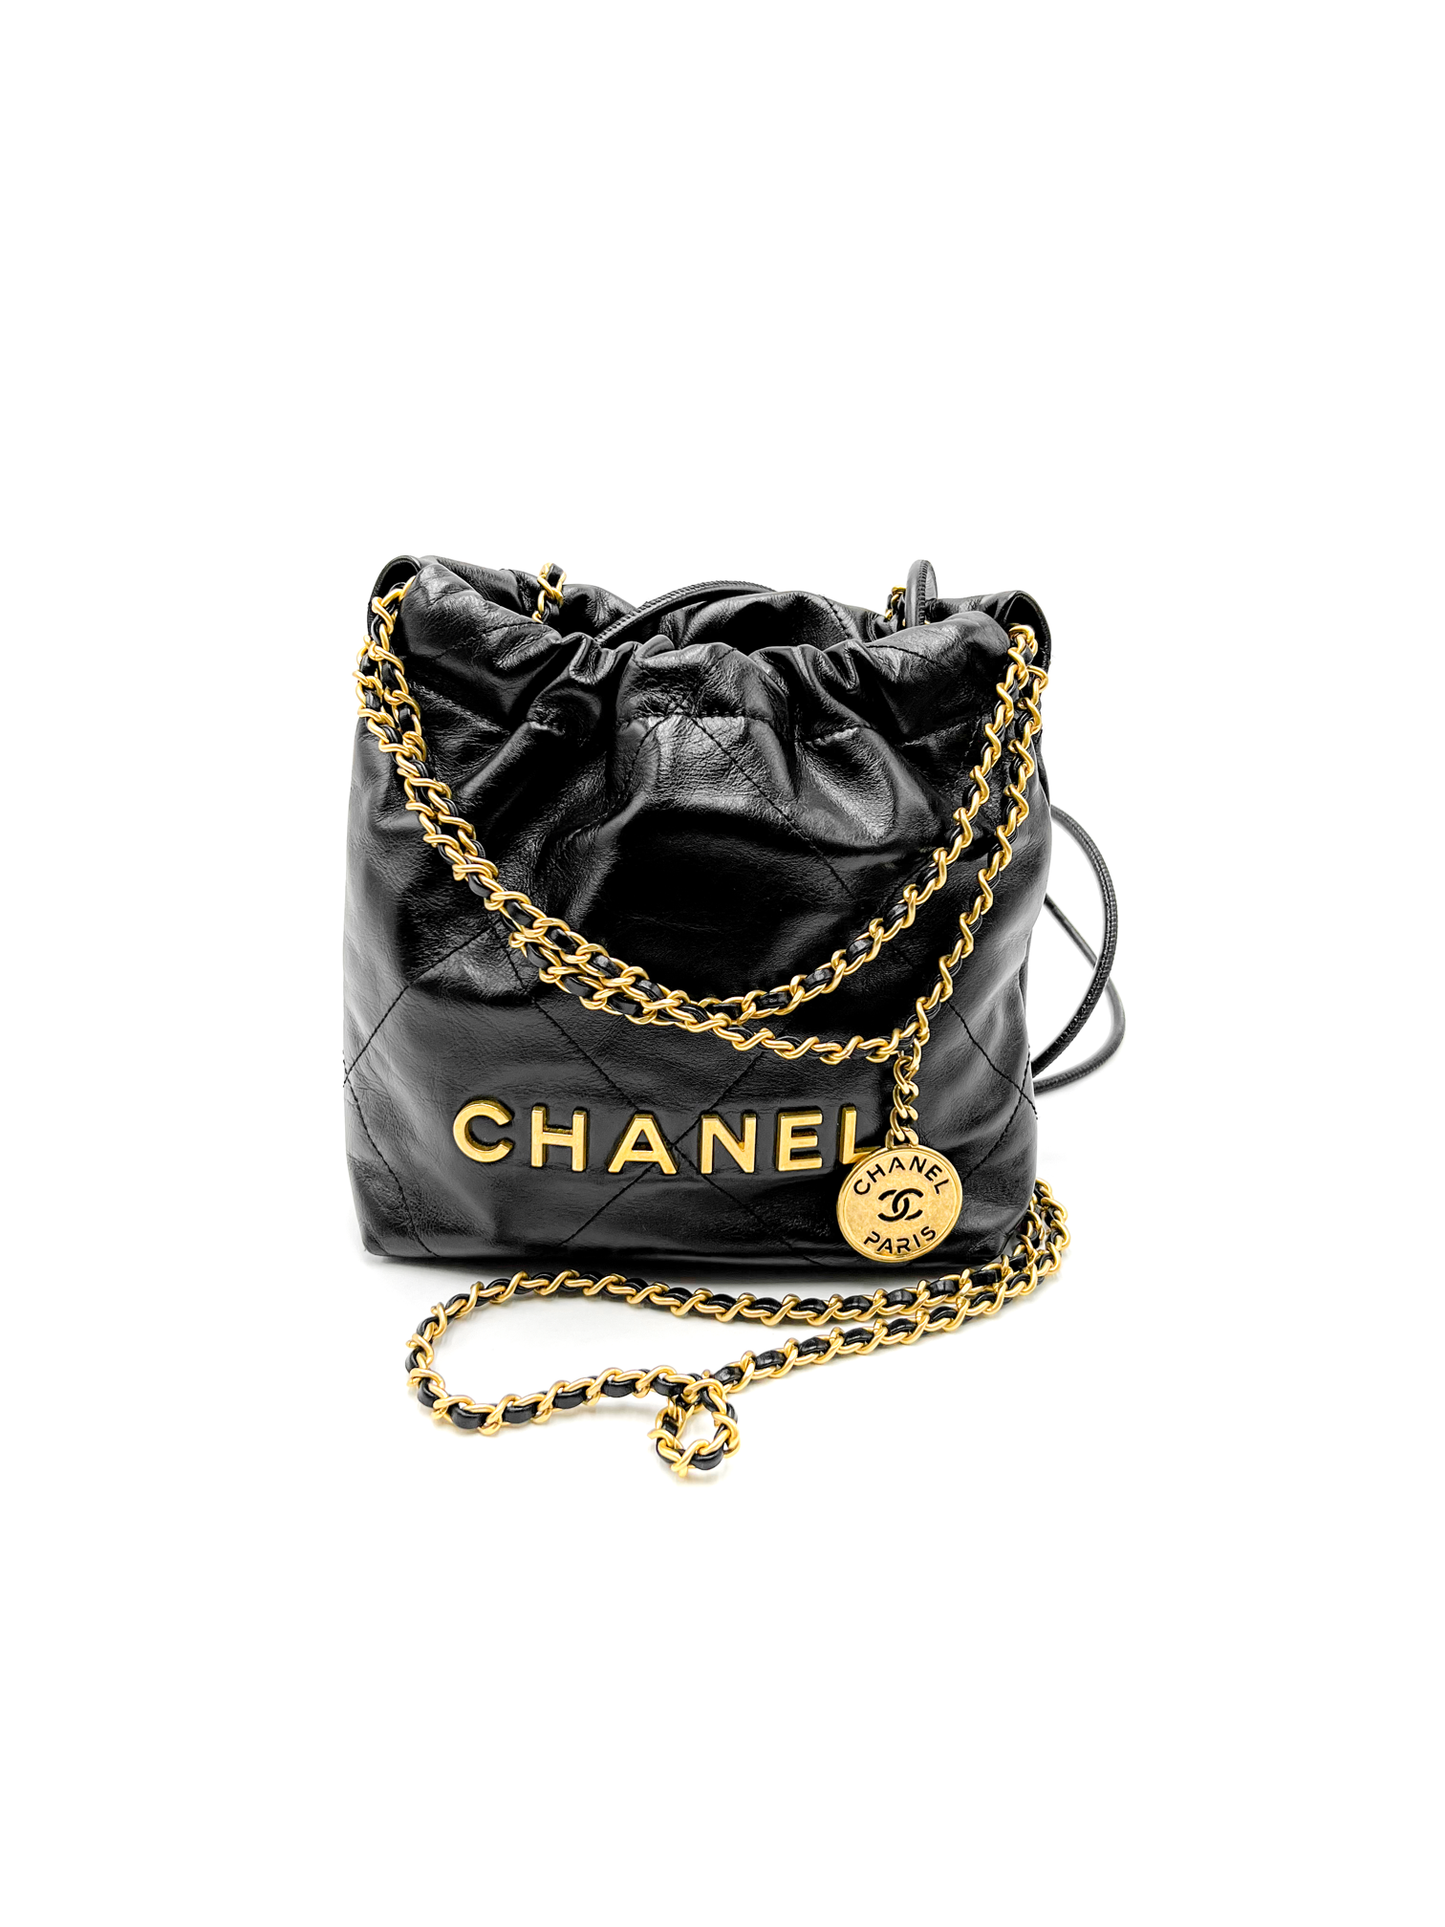 Chanel 22 Mini Handbag Hobo Black with Gold Aged Hardware